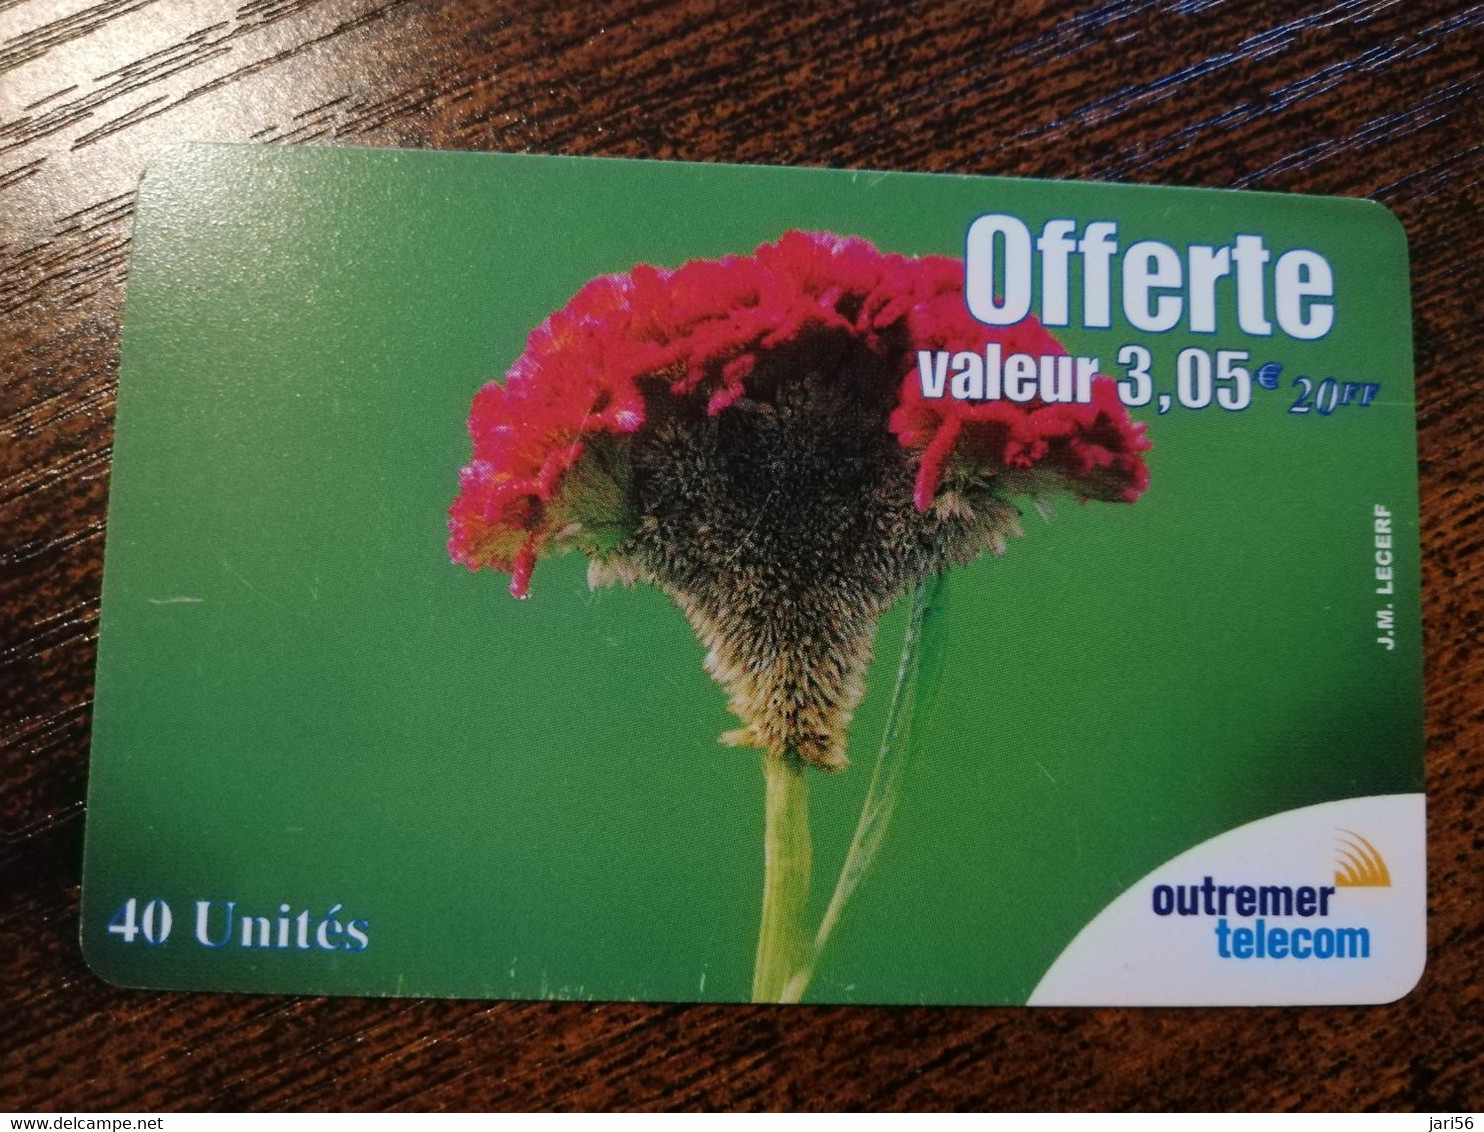 ST MARTIN  OUTREMER TELECOM/ 20FF OFFERTE  FLOWER     ** 6757 ** - Antillen (Französische)